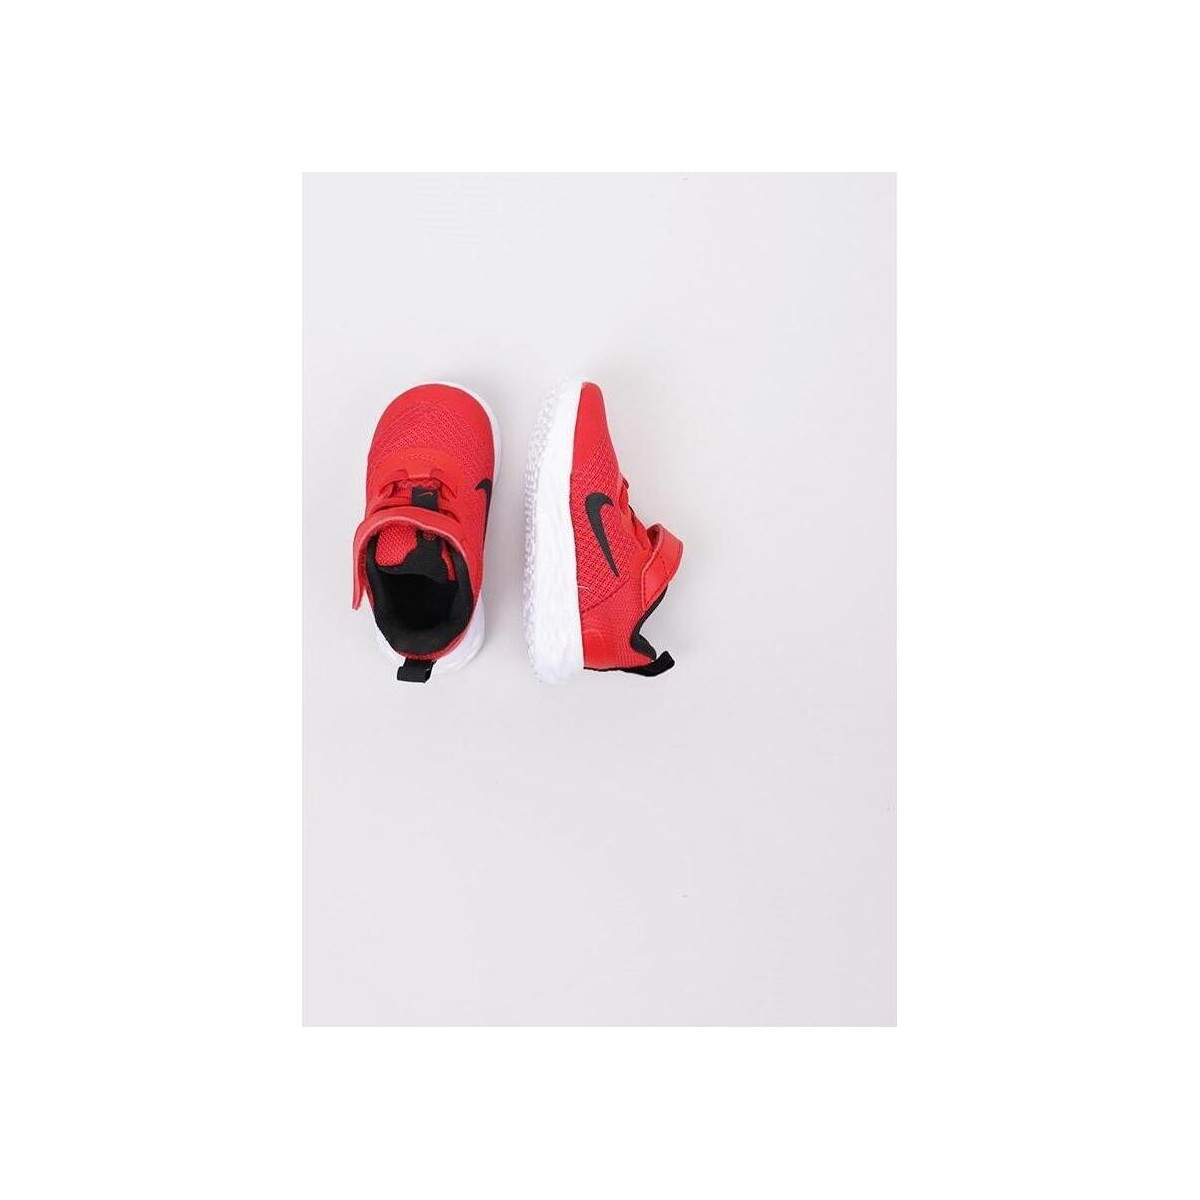 Nike Rouge REVOLUTION 6 (TDV)de q7m1y1iq